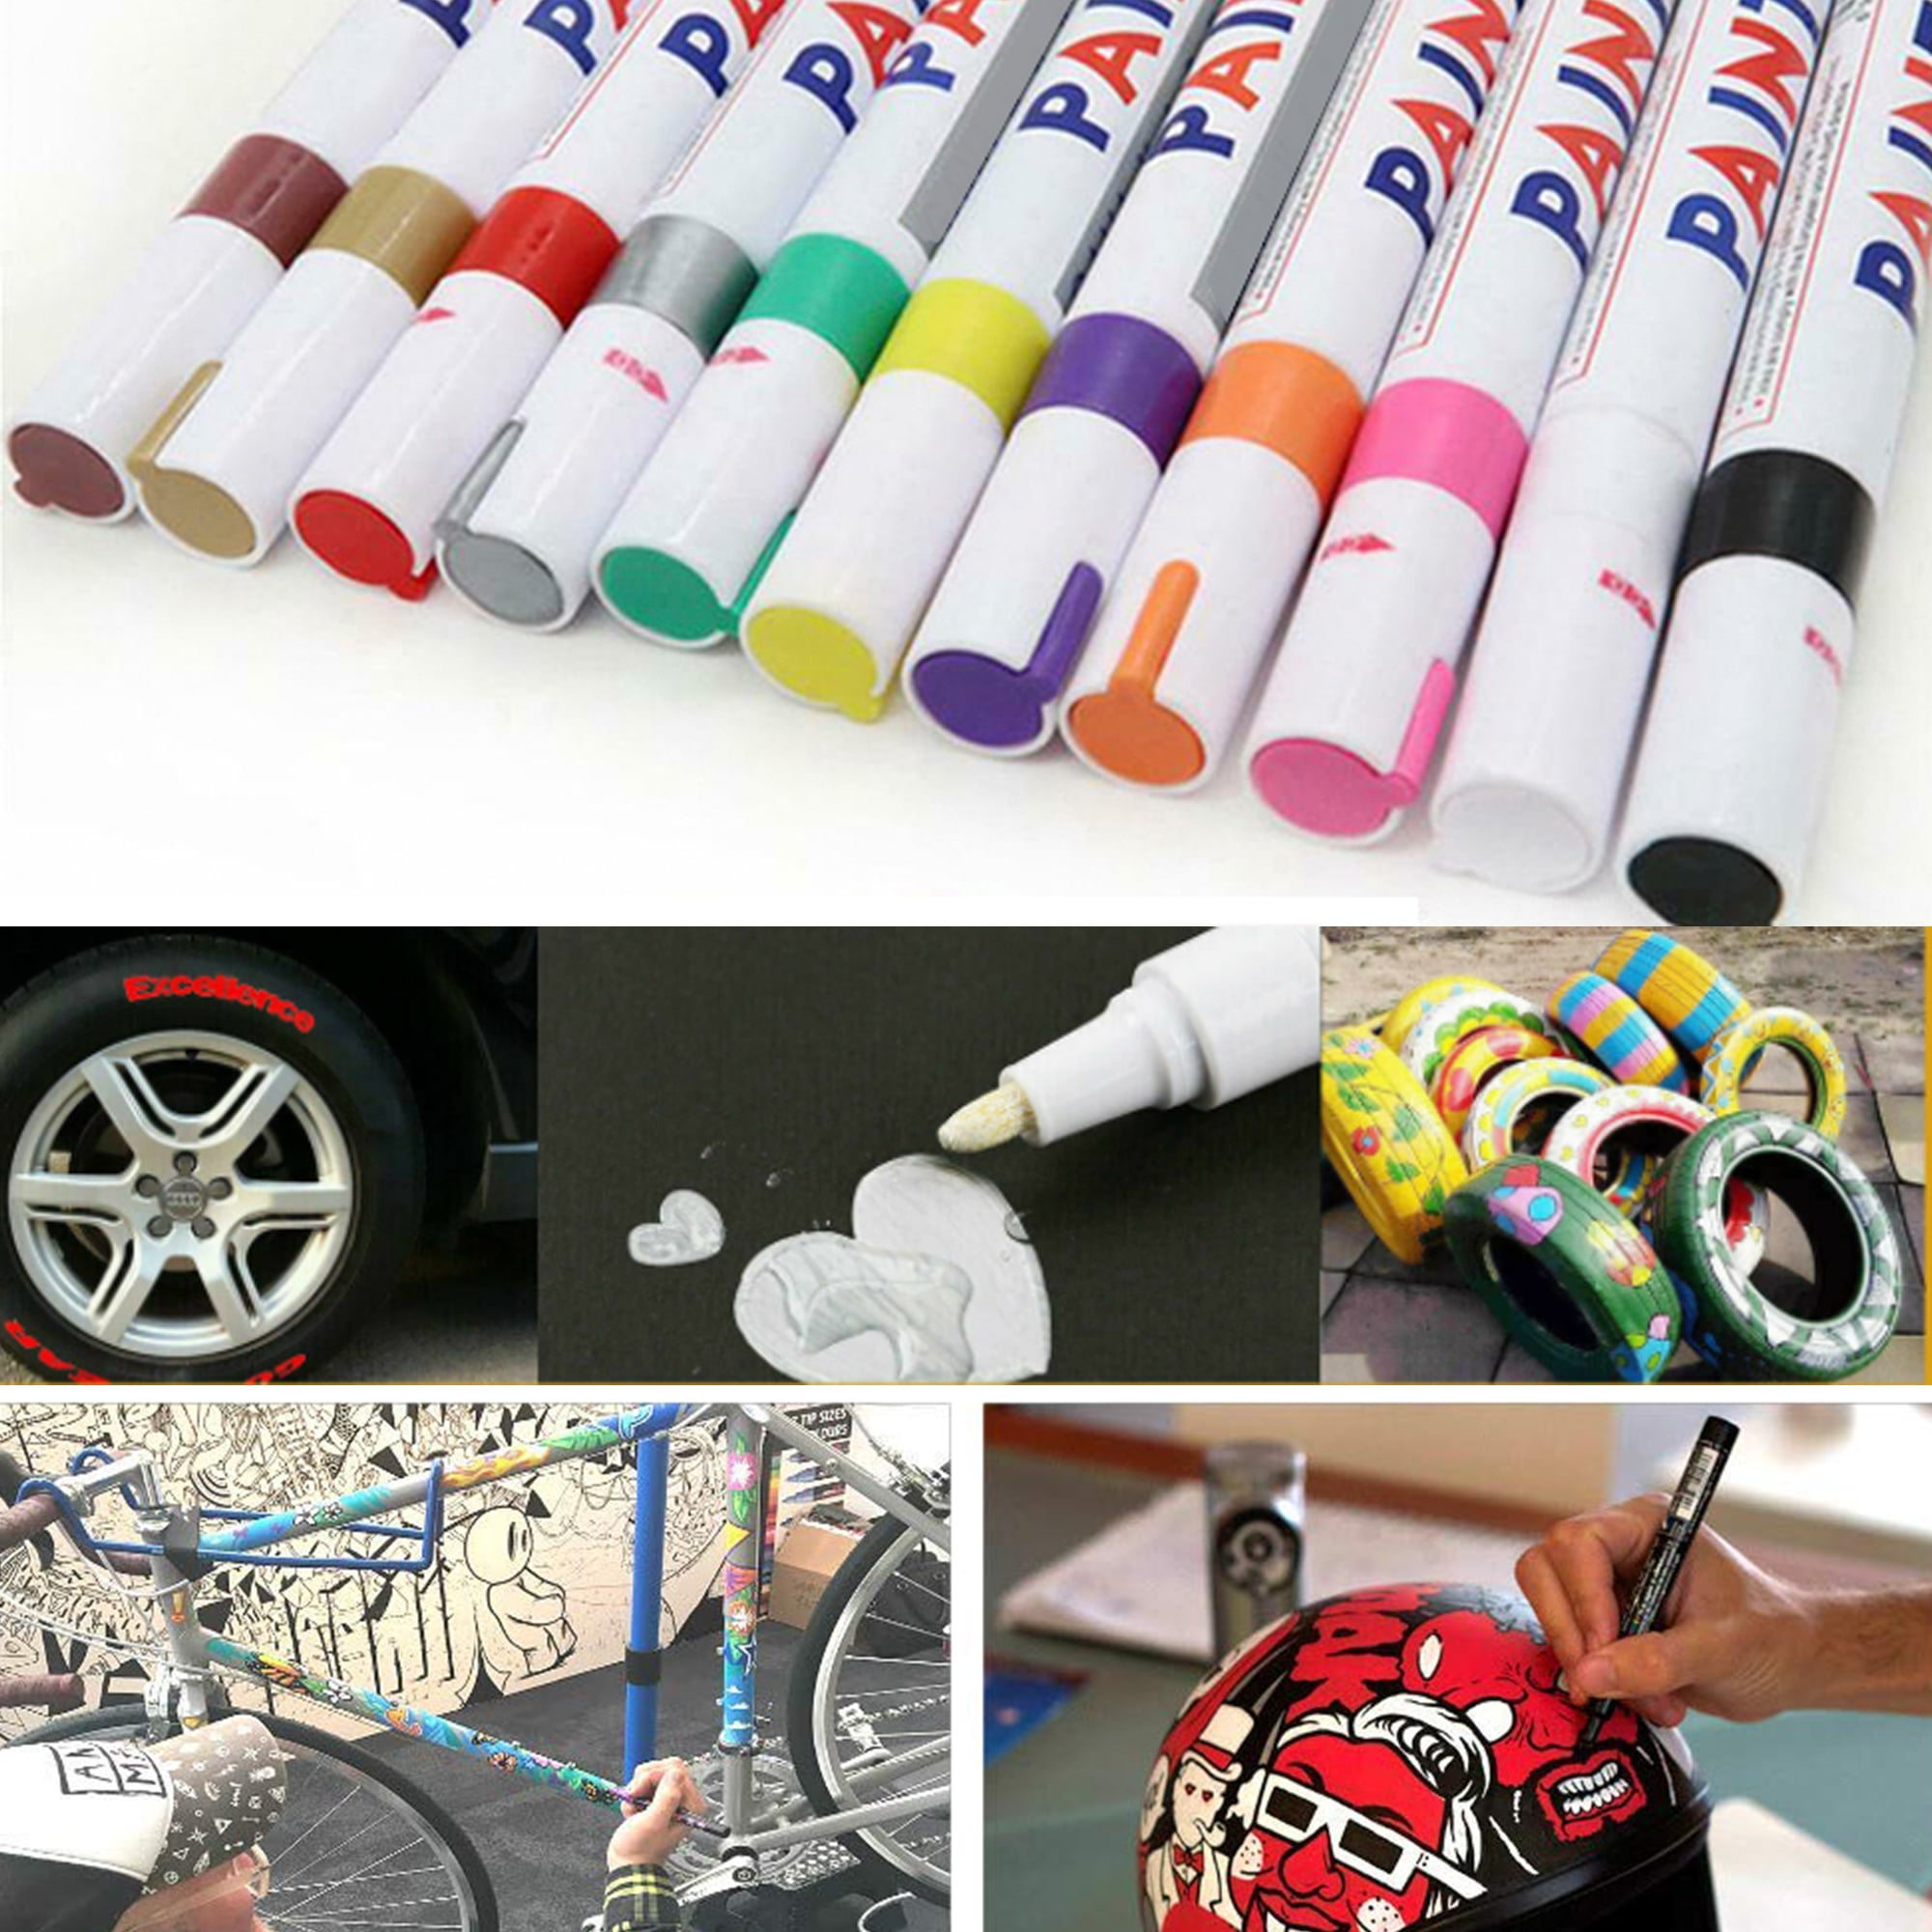 2pcs DIY Reflective Paint Pens Non-Toxic Non-Fading Waterproof